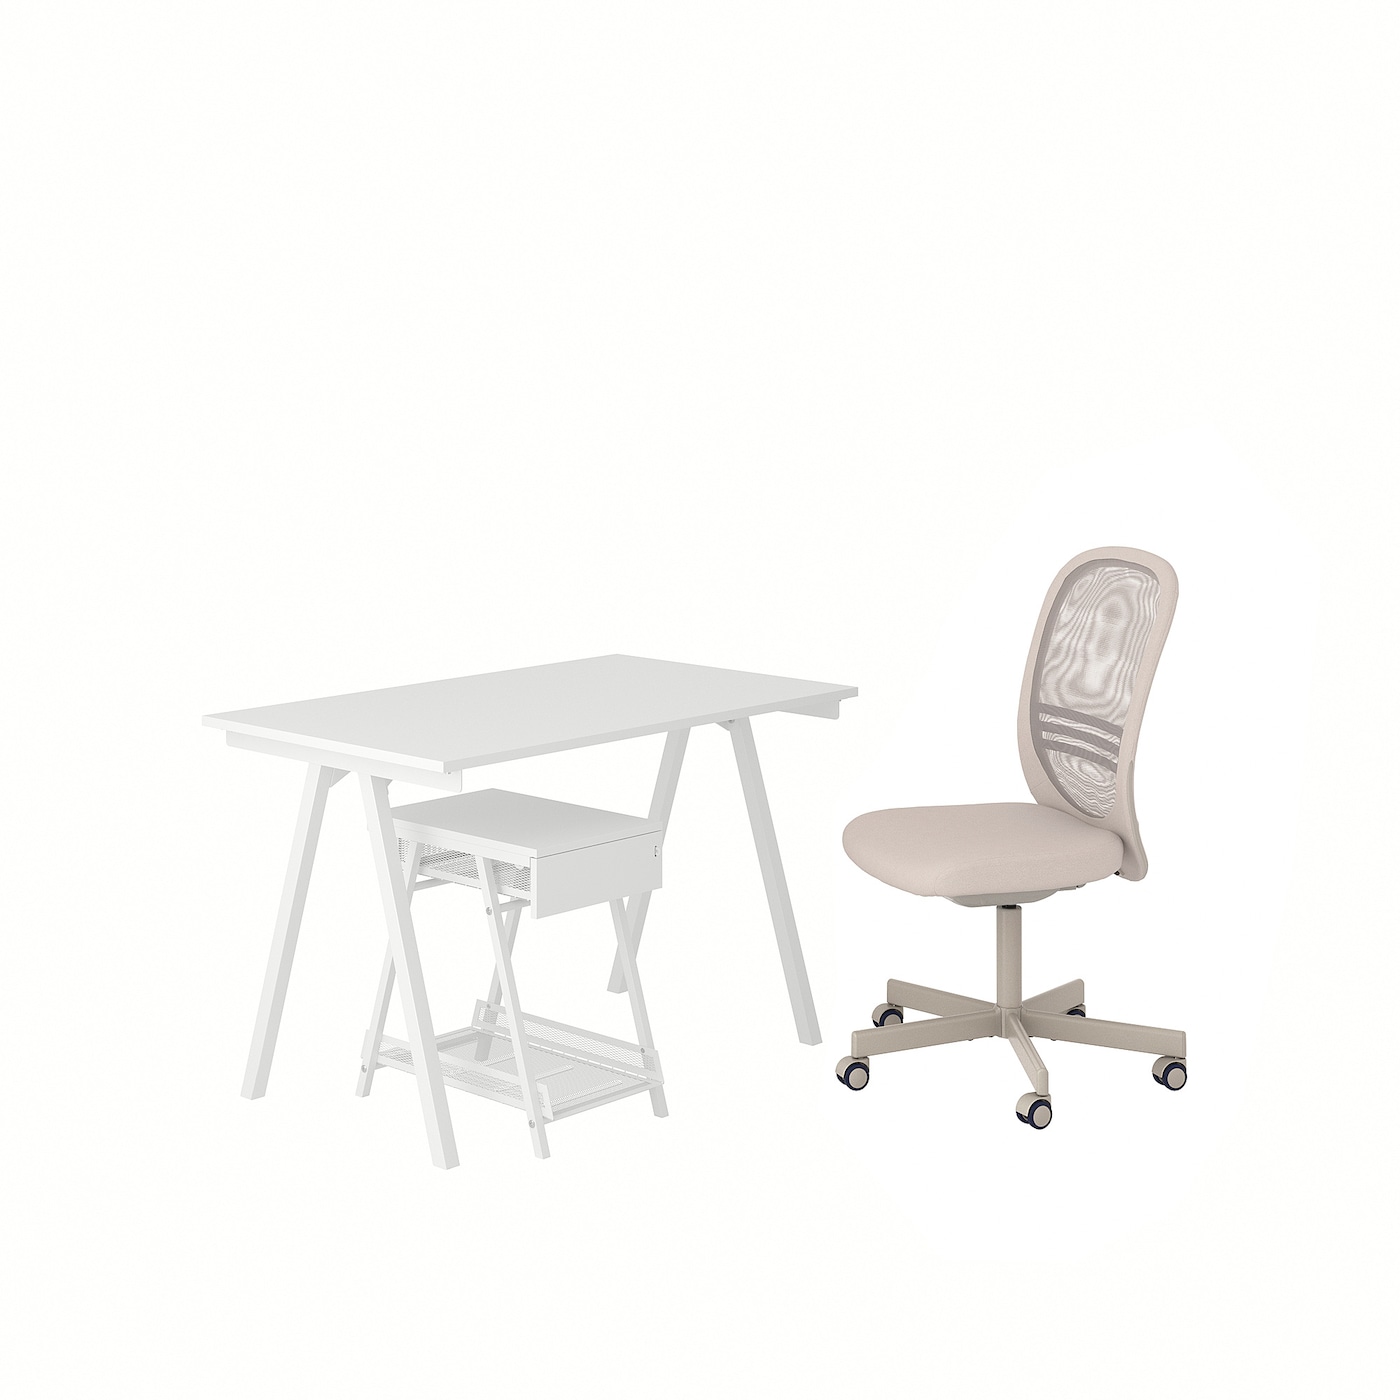 Комбинация для хранения, стол и кресло - IKEA TROTTEN/FLINTAN, 120х70 см, 56х47х34 см, бело-бежевый ТРОТТЕН/ФЛИНТАН ИКЕА